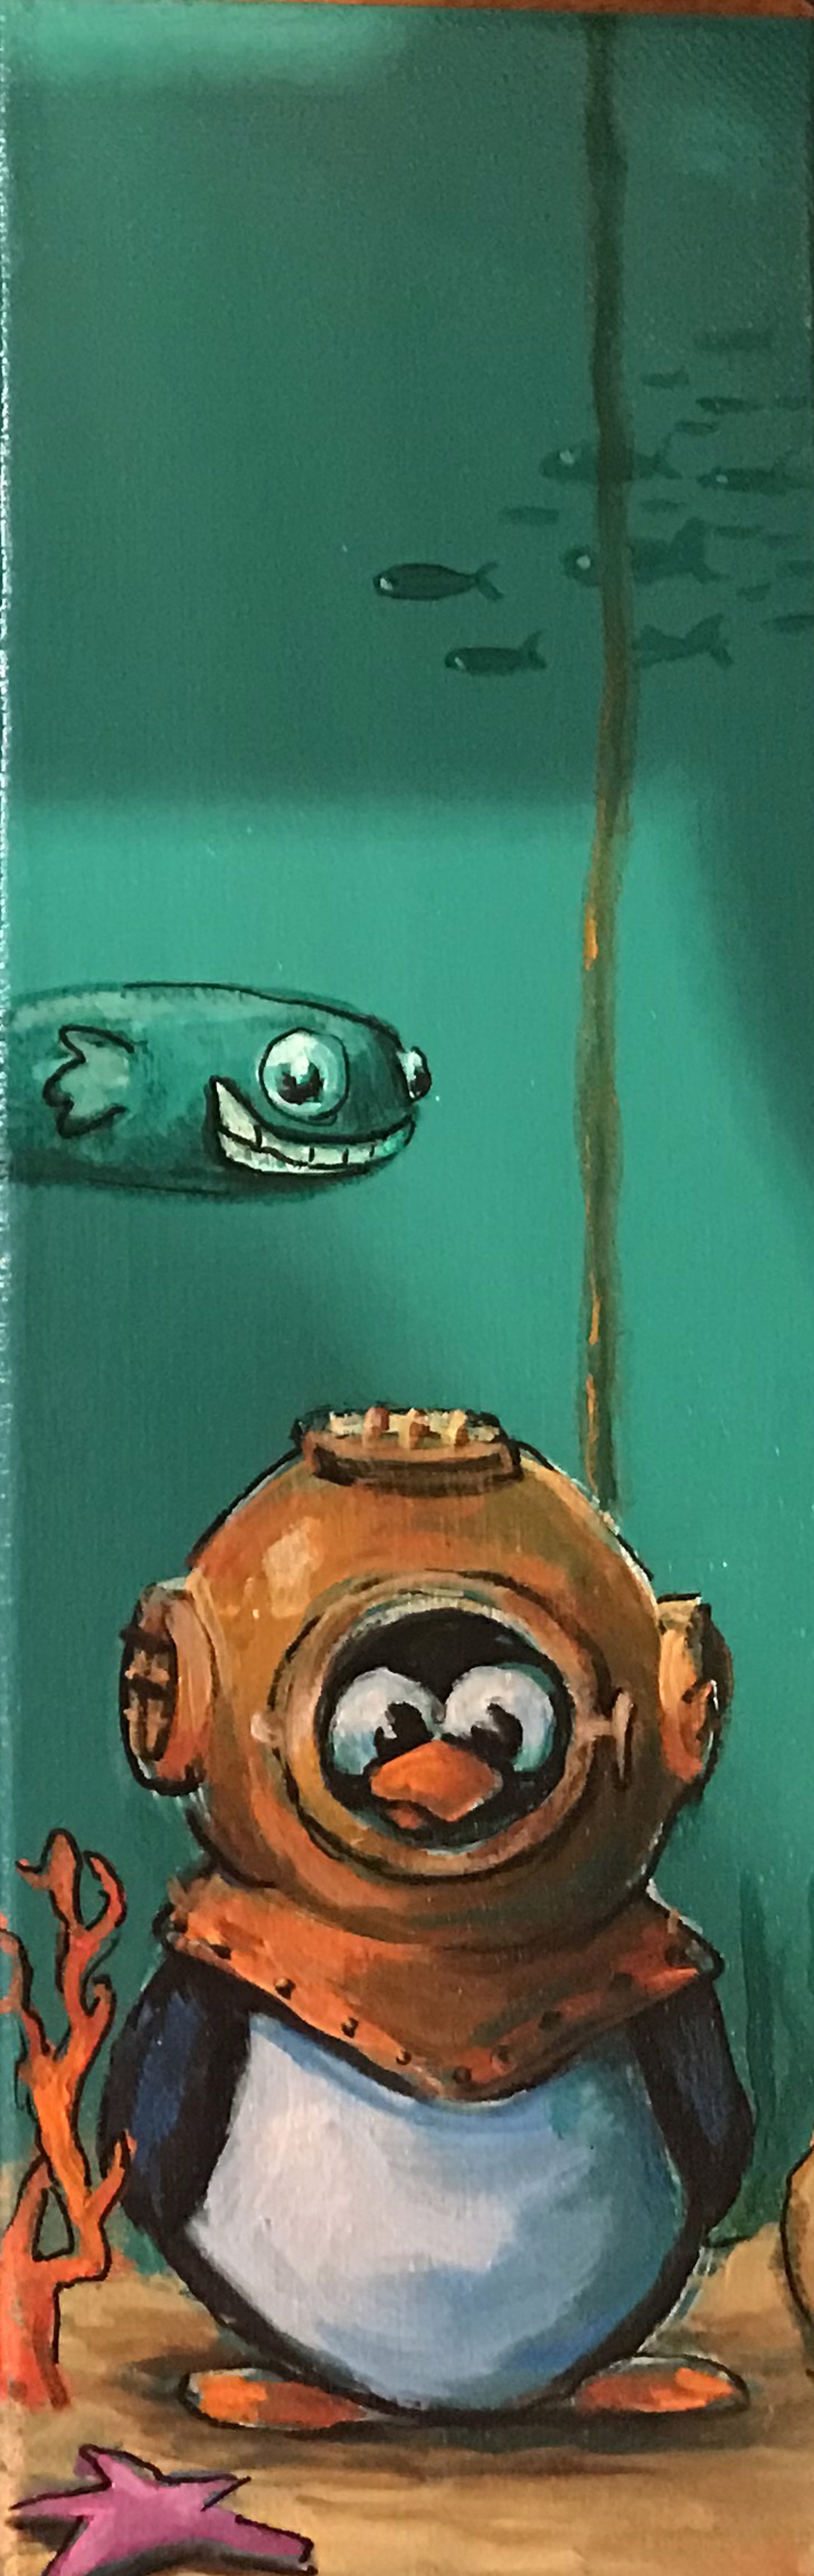 Sponge Diver (Penguin) by Cindy Anderson